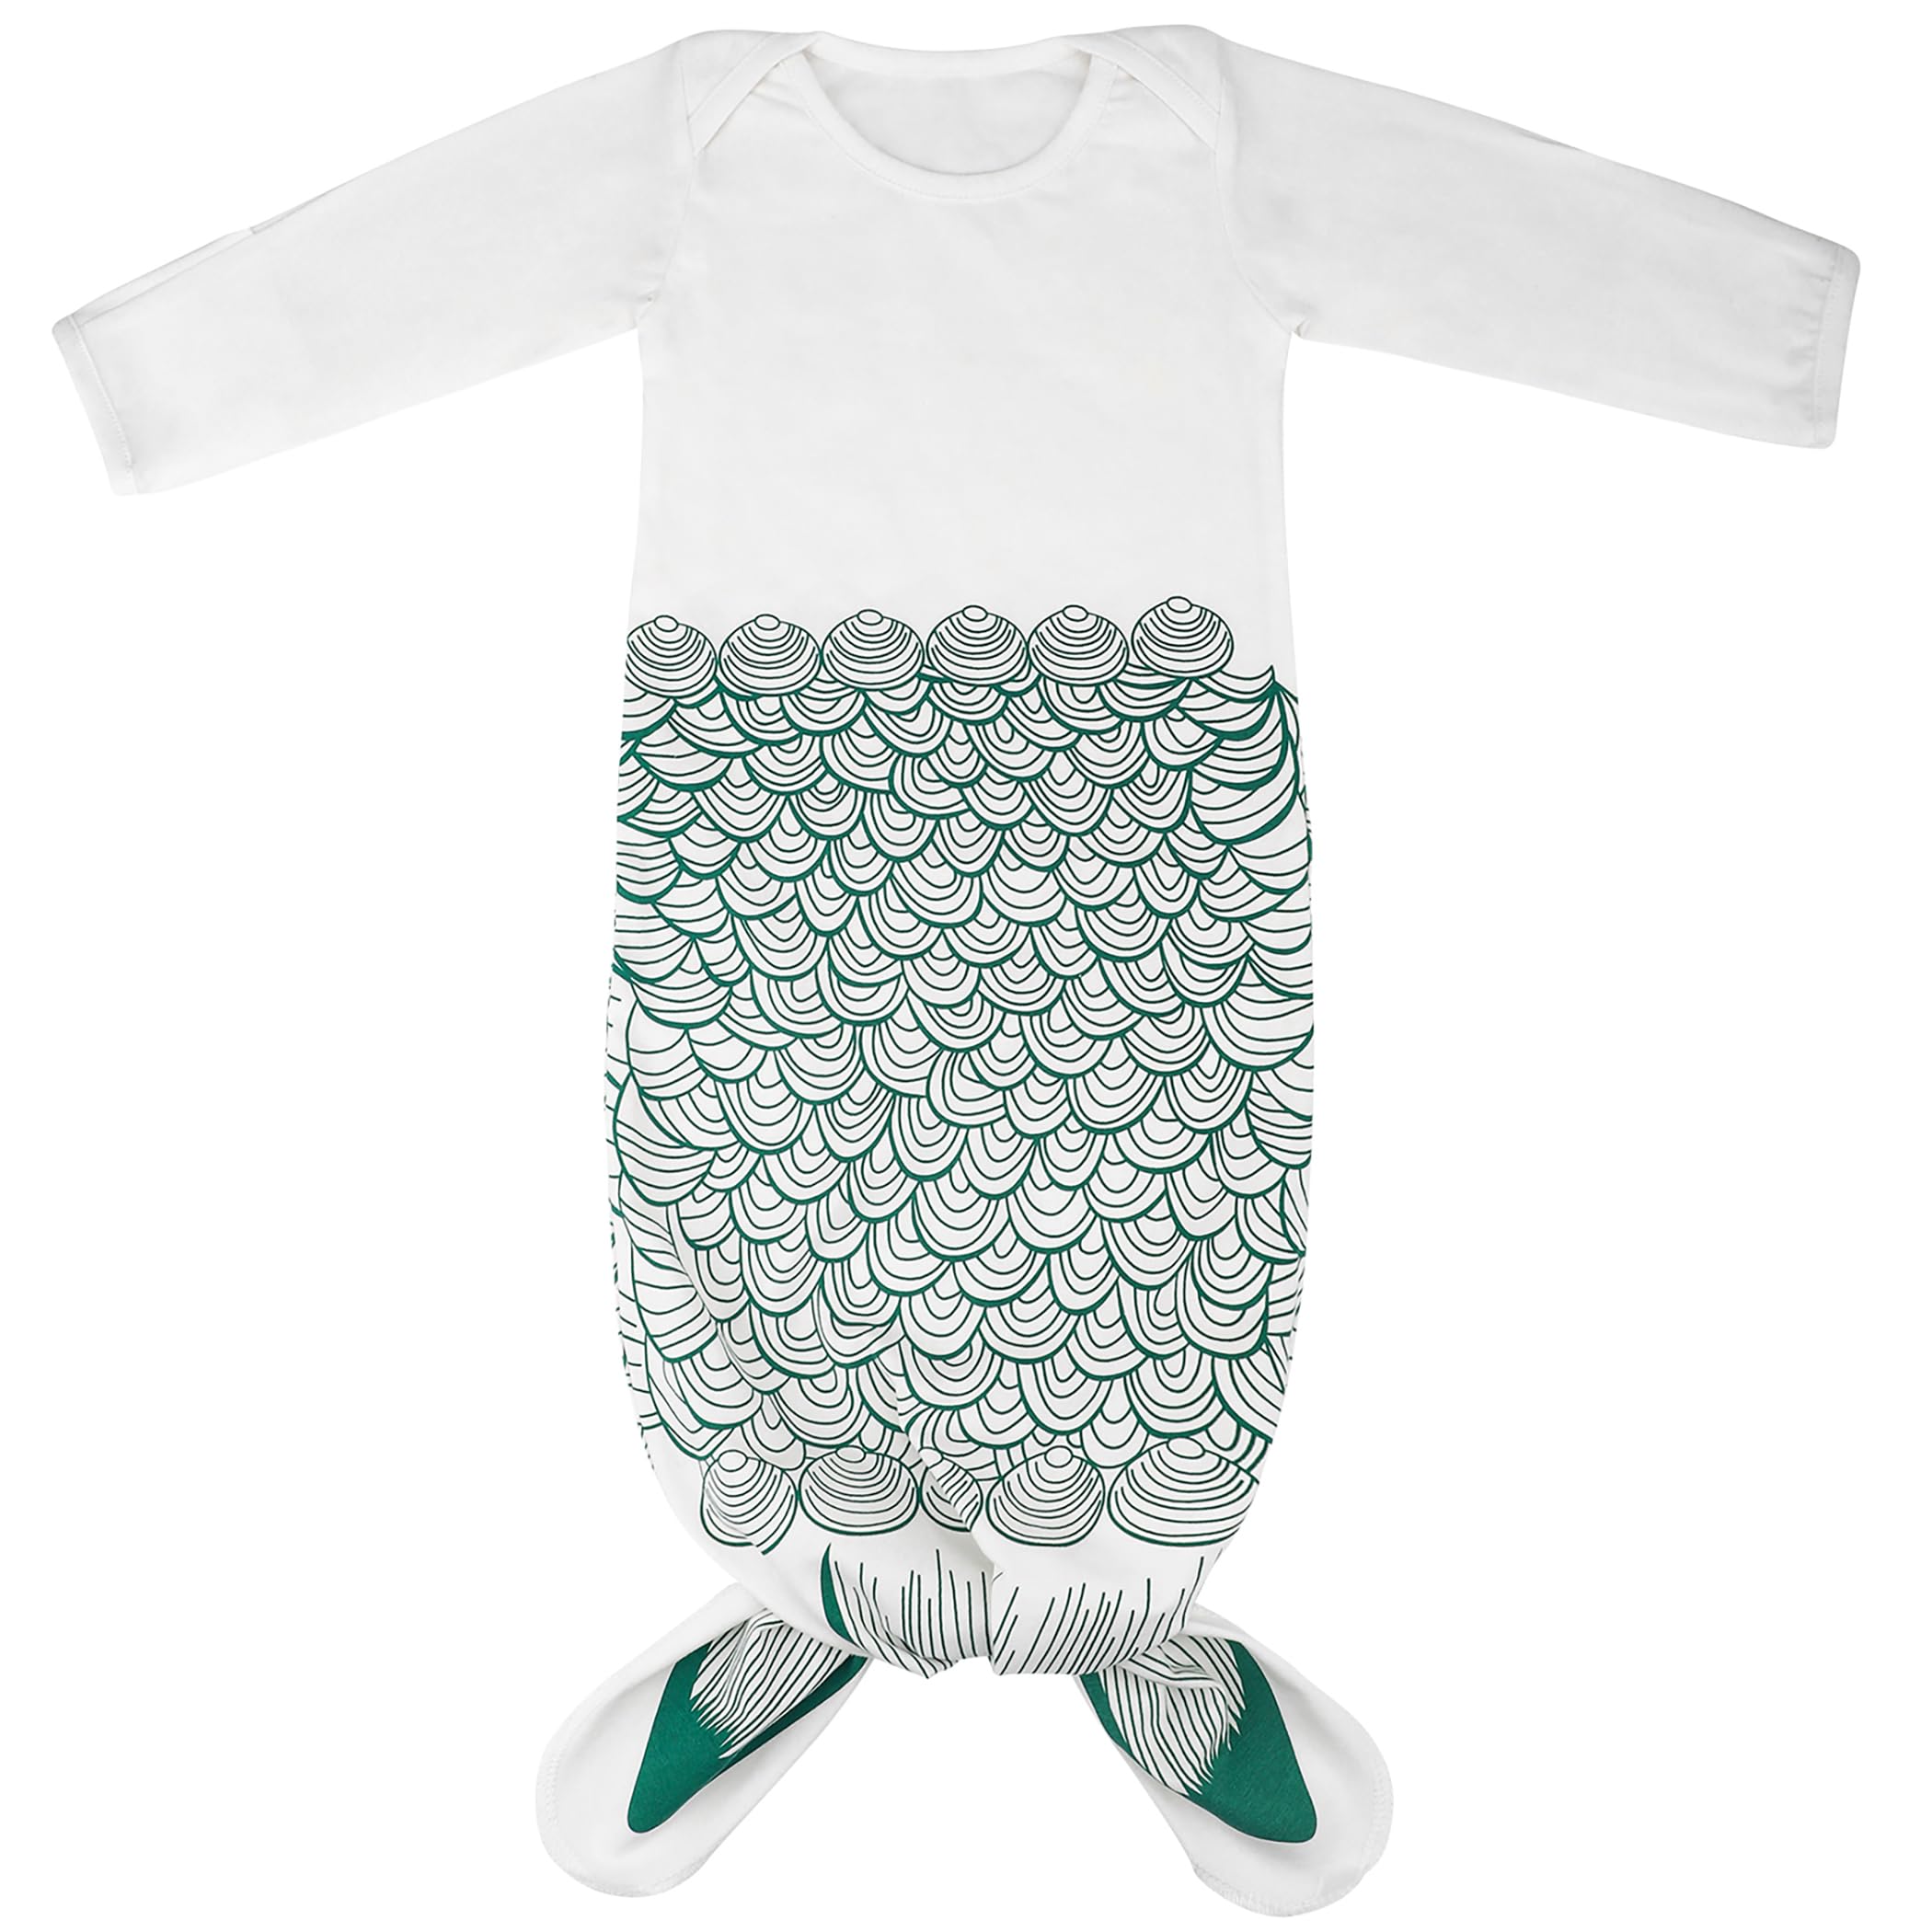 Newborn Gowns Long Sleeves Baby Sleep Bag Mermaid Newborn Clothes Baby Wearable Blanket Newborn Gift for Girls Boys